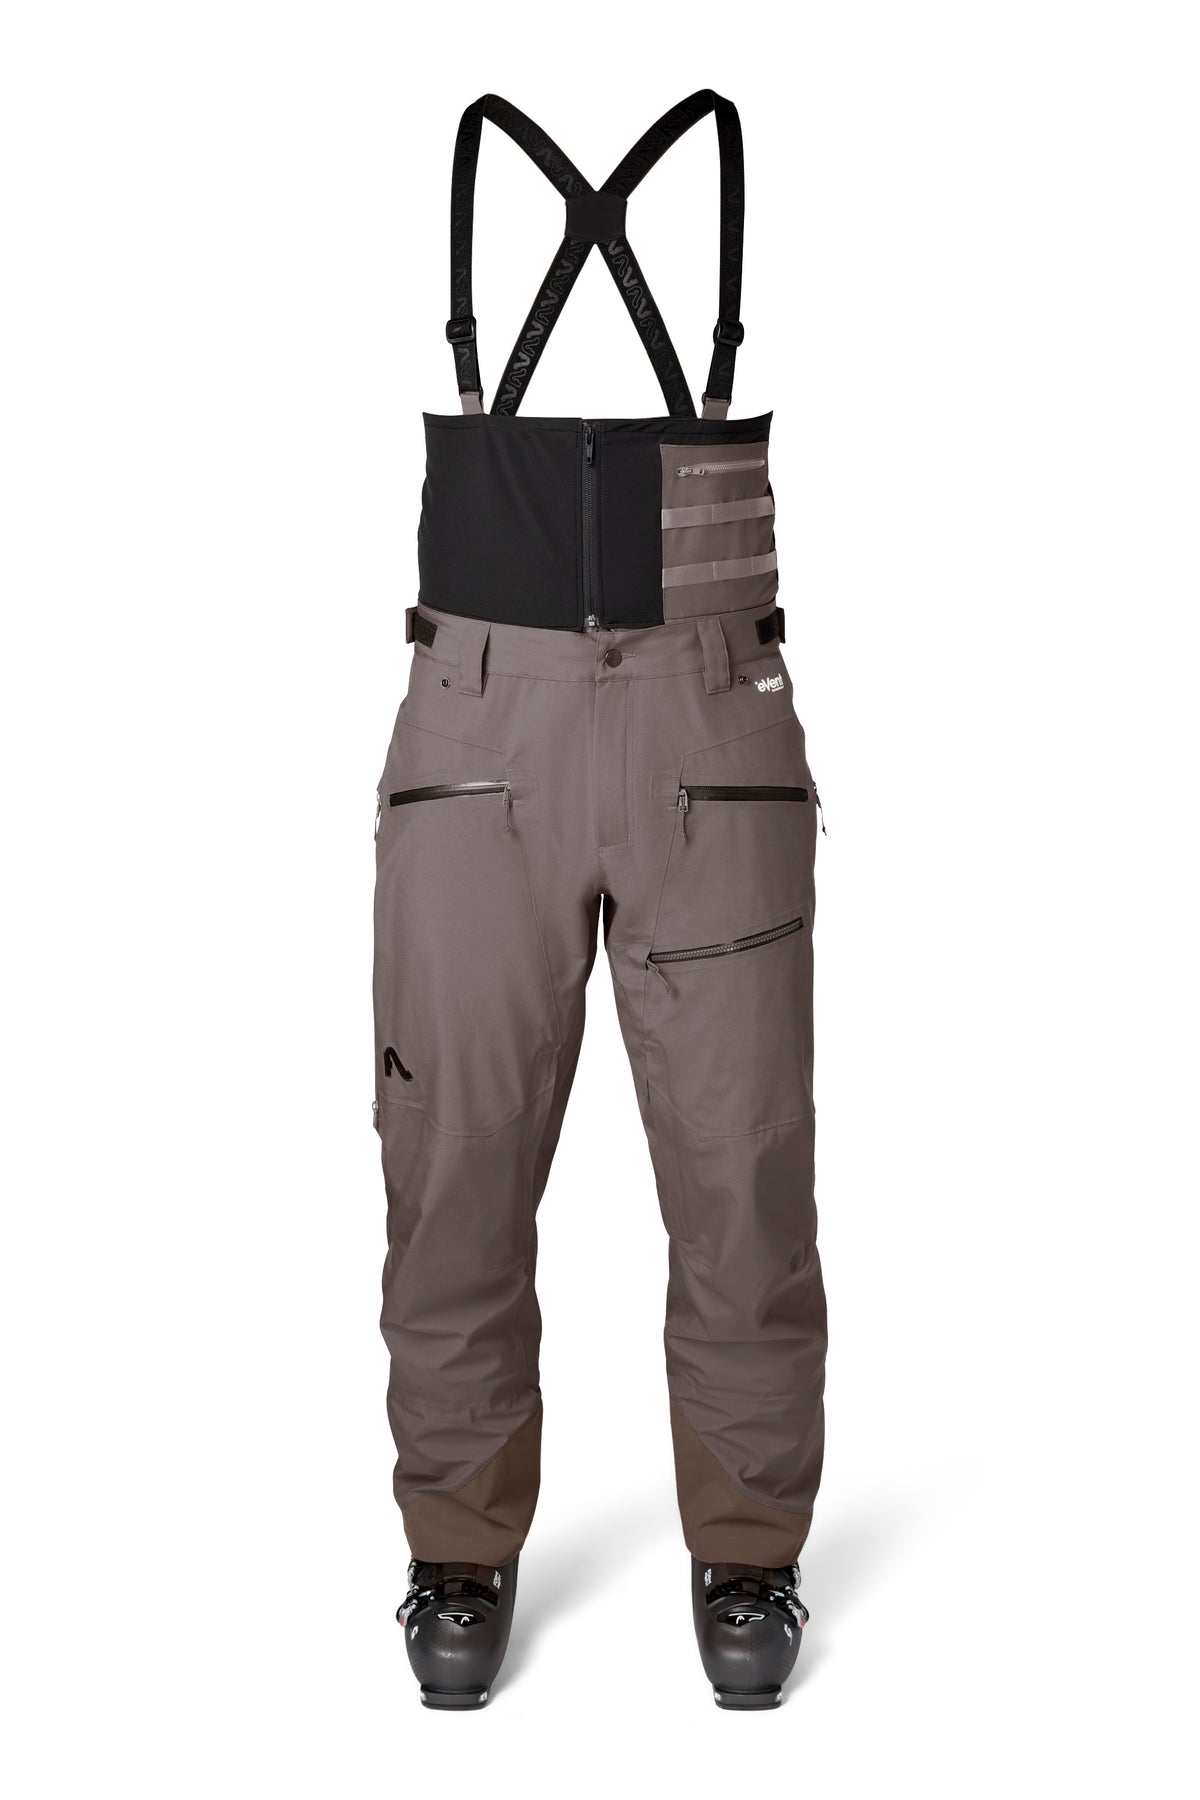 Custom Snowboard Pants & Bibs - USA Made